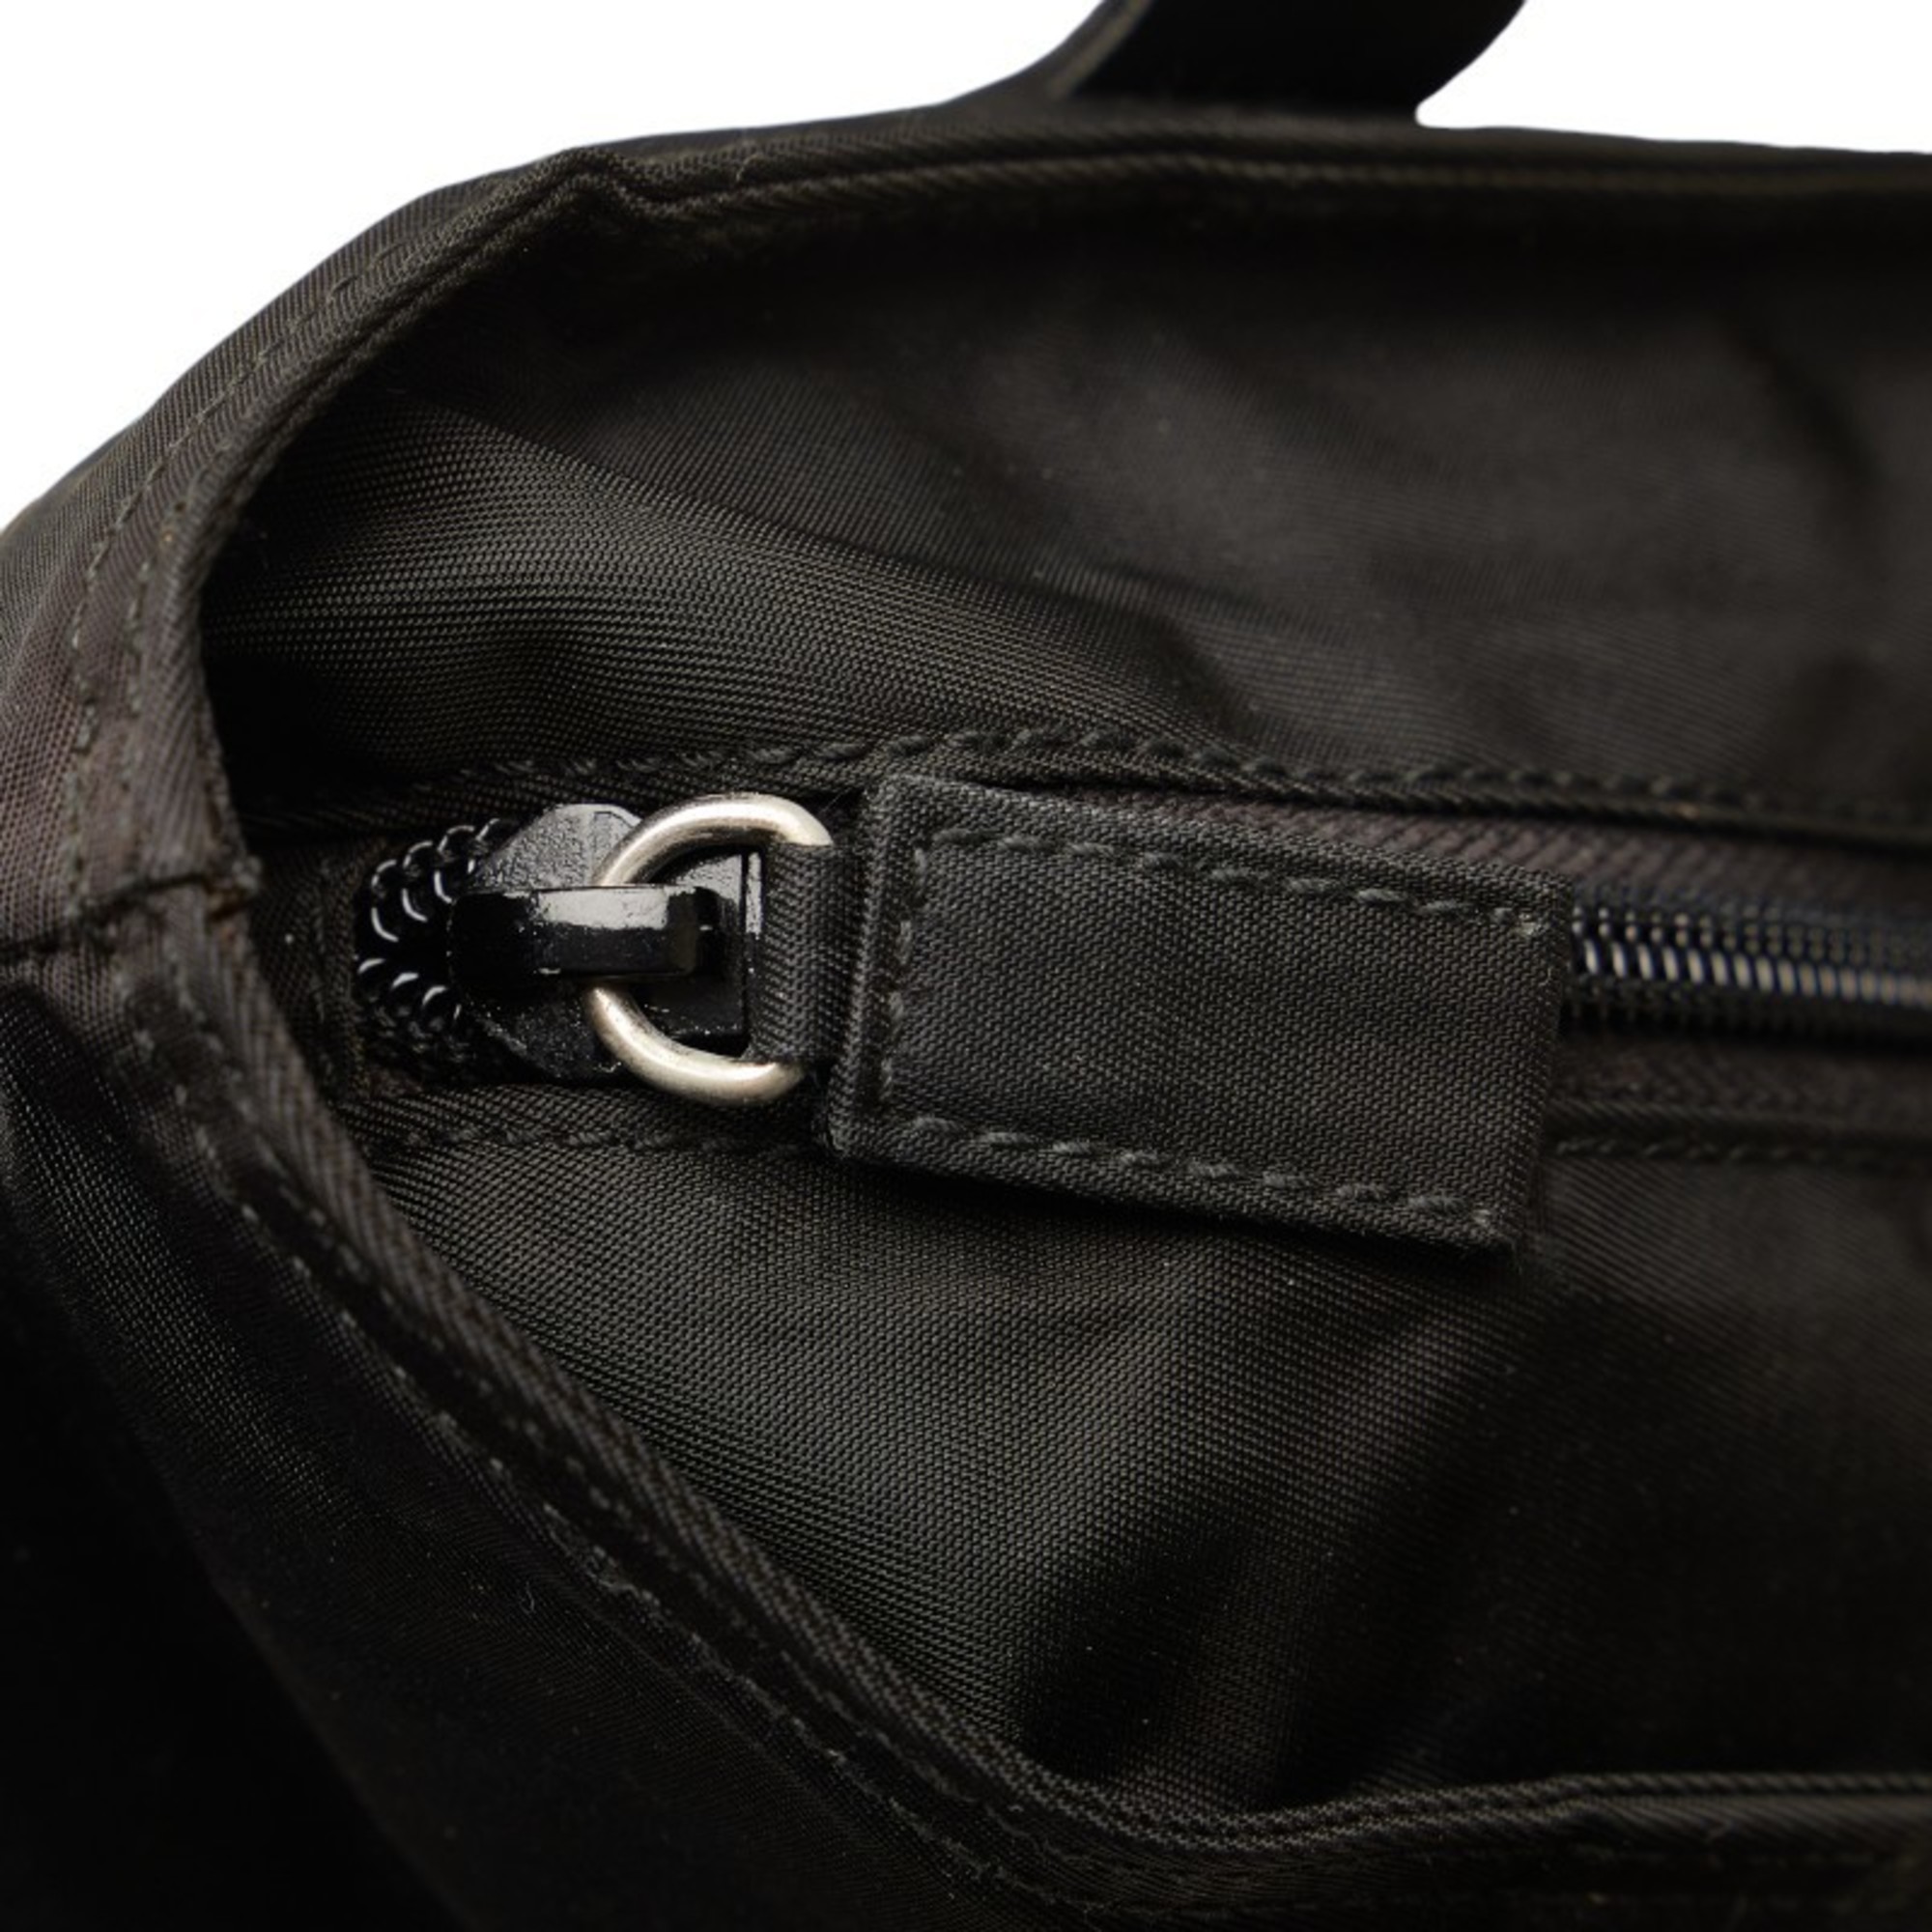 Prada Tote Bag Handbag Black Nylon Leather Women's PRADA